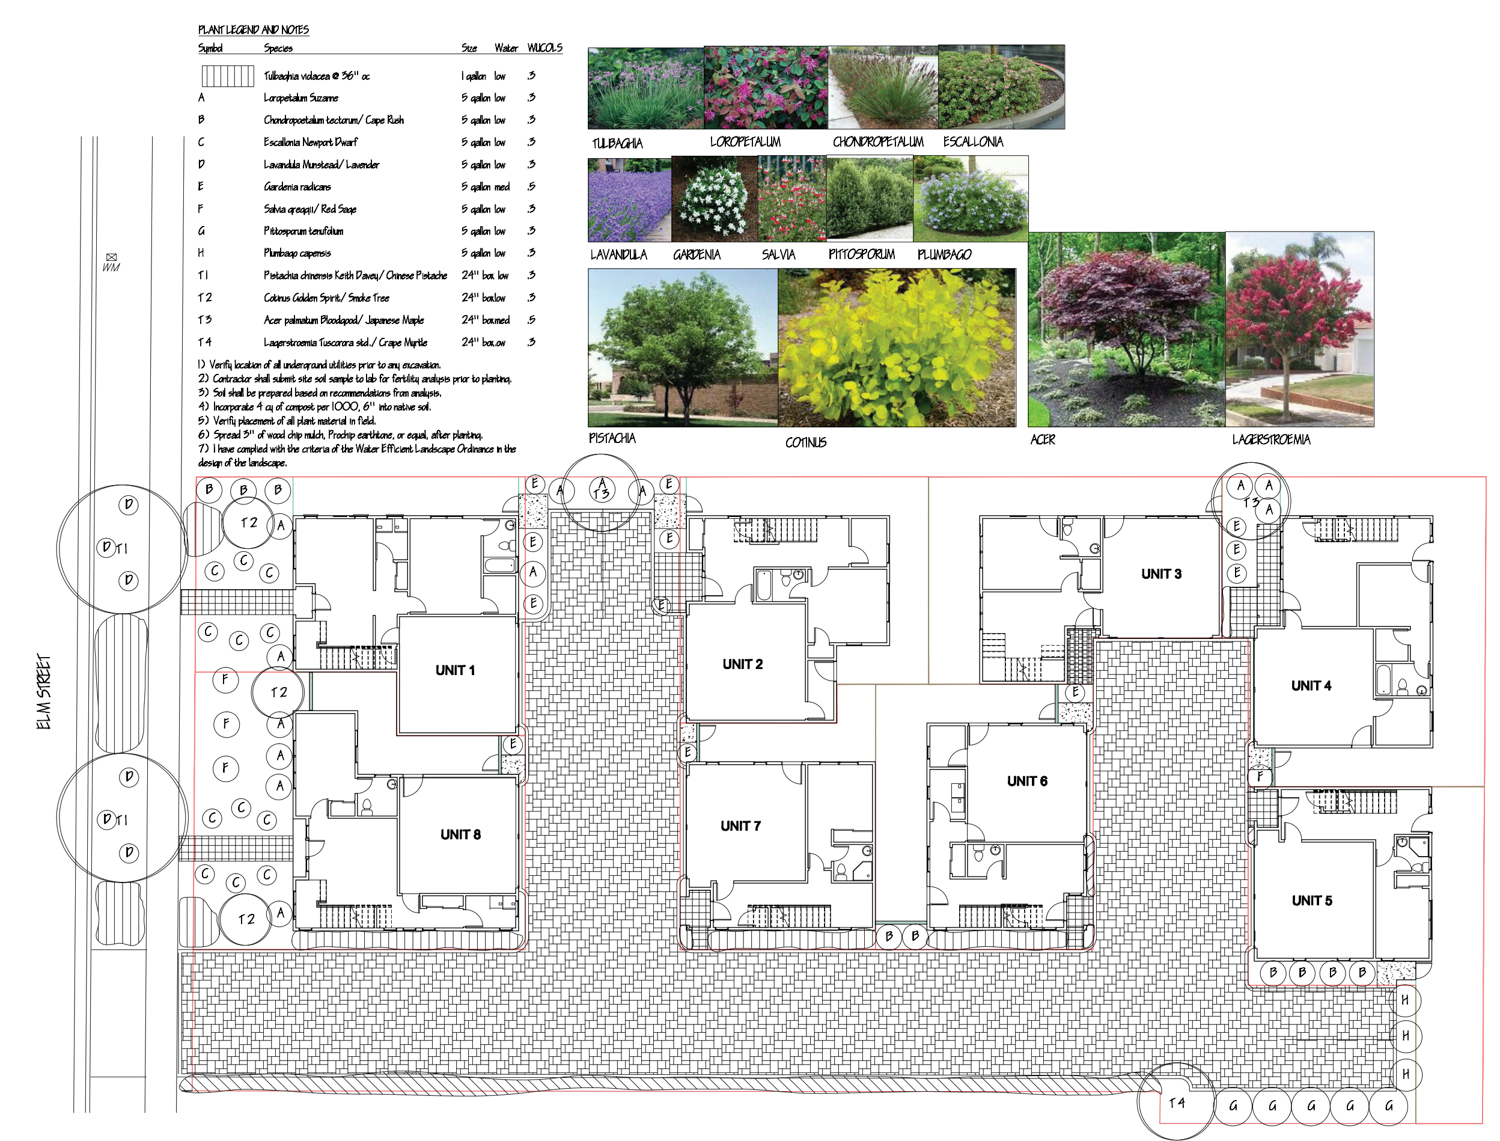 972 Elm Street Villas planting plan, image from W. Jeffrey Heid